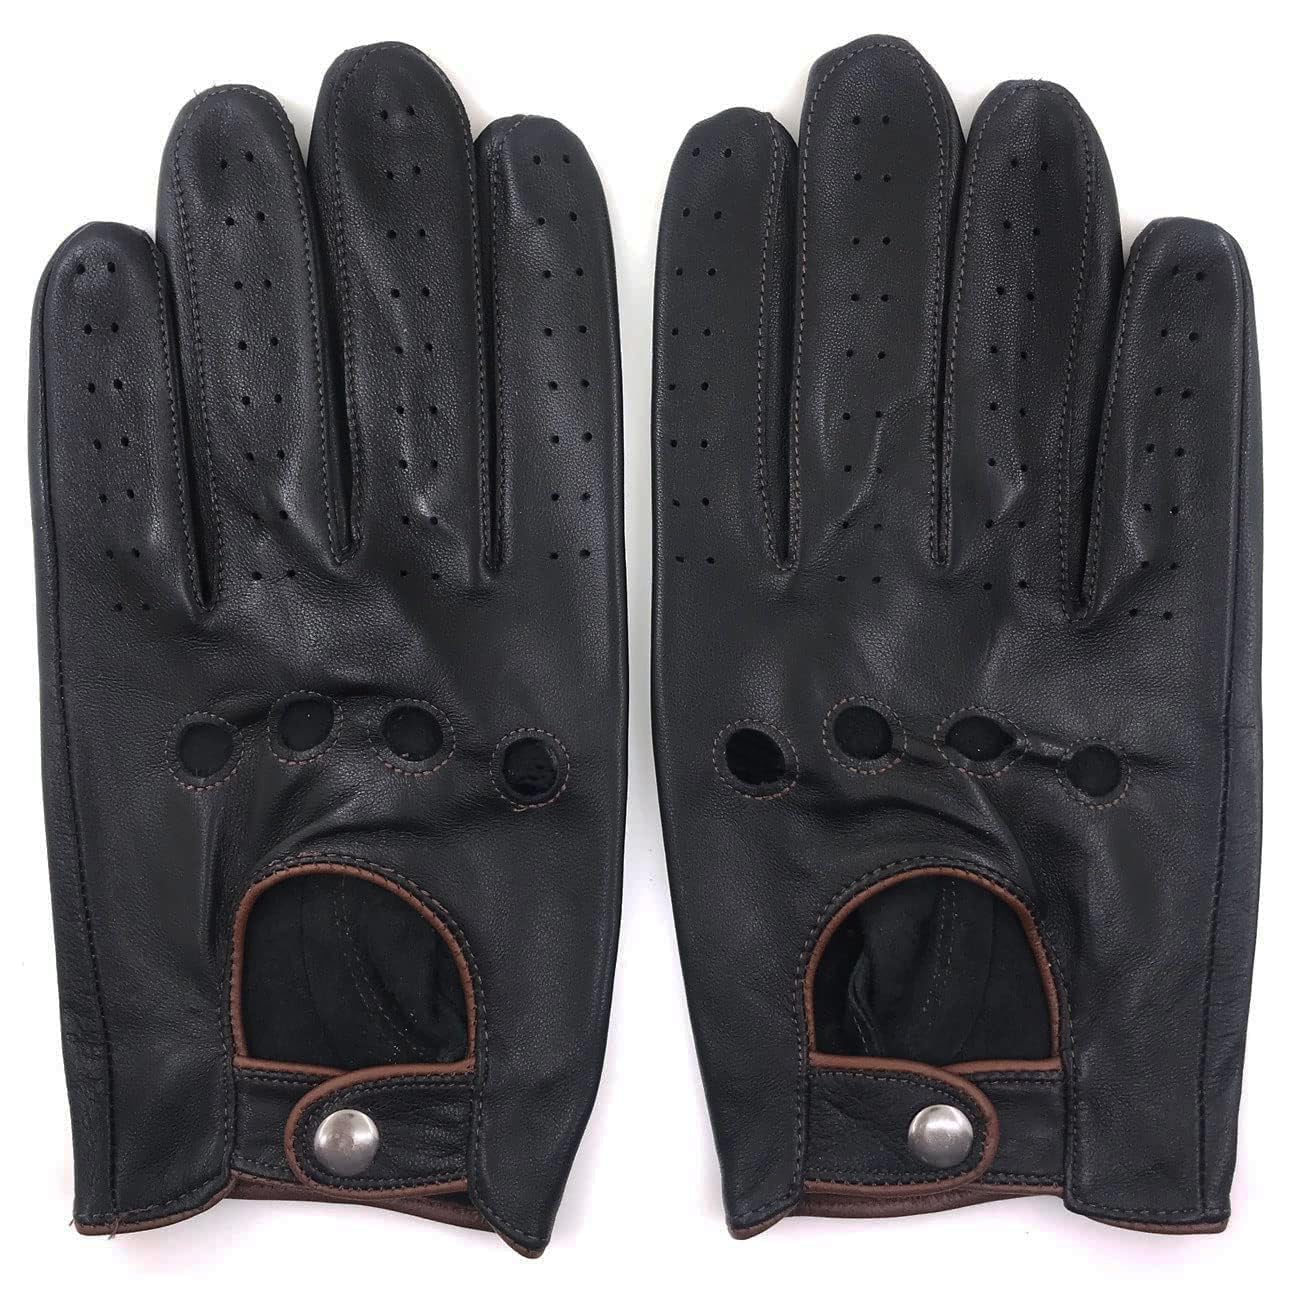 ZLUXURQ Herren-Handschuhe, italienisches Design, weich und dünn, exzellentes Lammleder, Touchscreen-Handschuhe, Schwarz/Rotbraun (Lammfell/Touchscreen), L-24 cm von ZLUXURQ